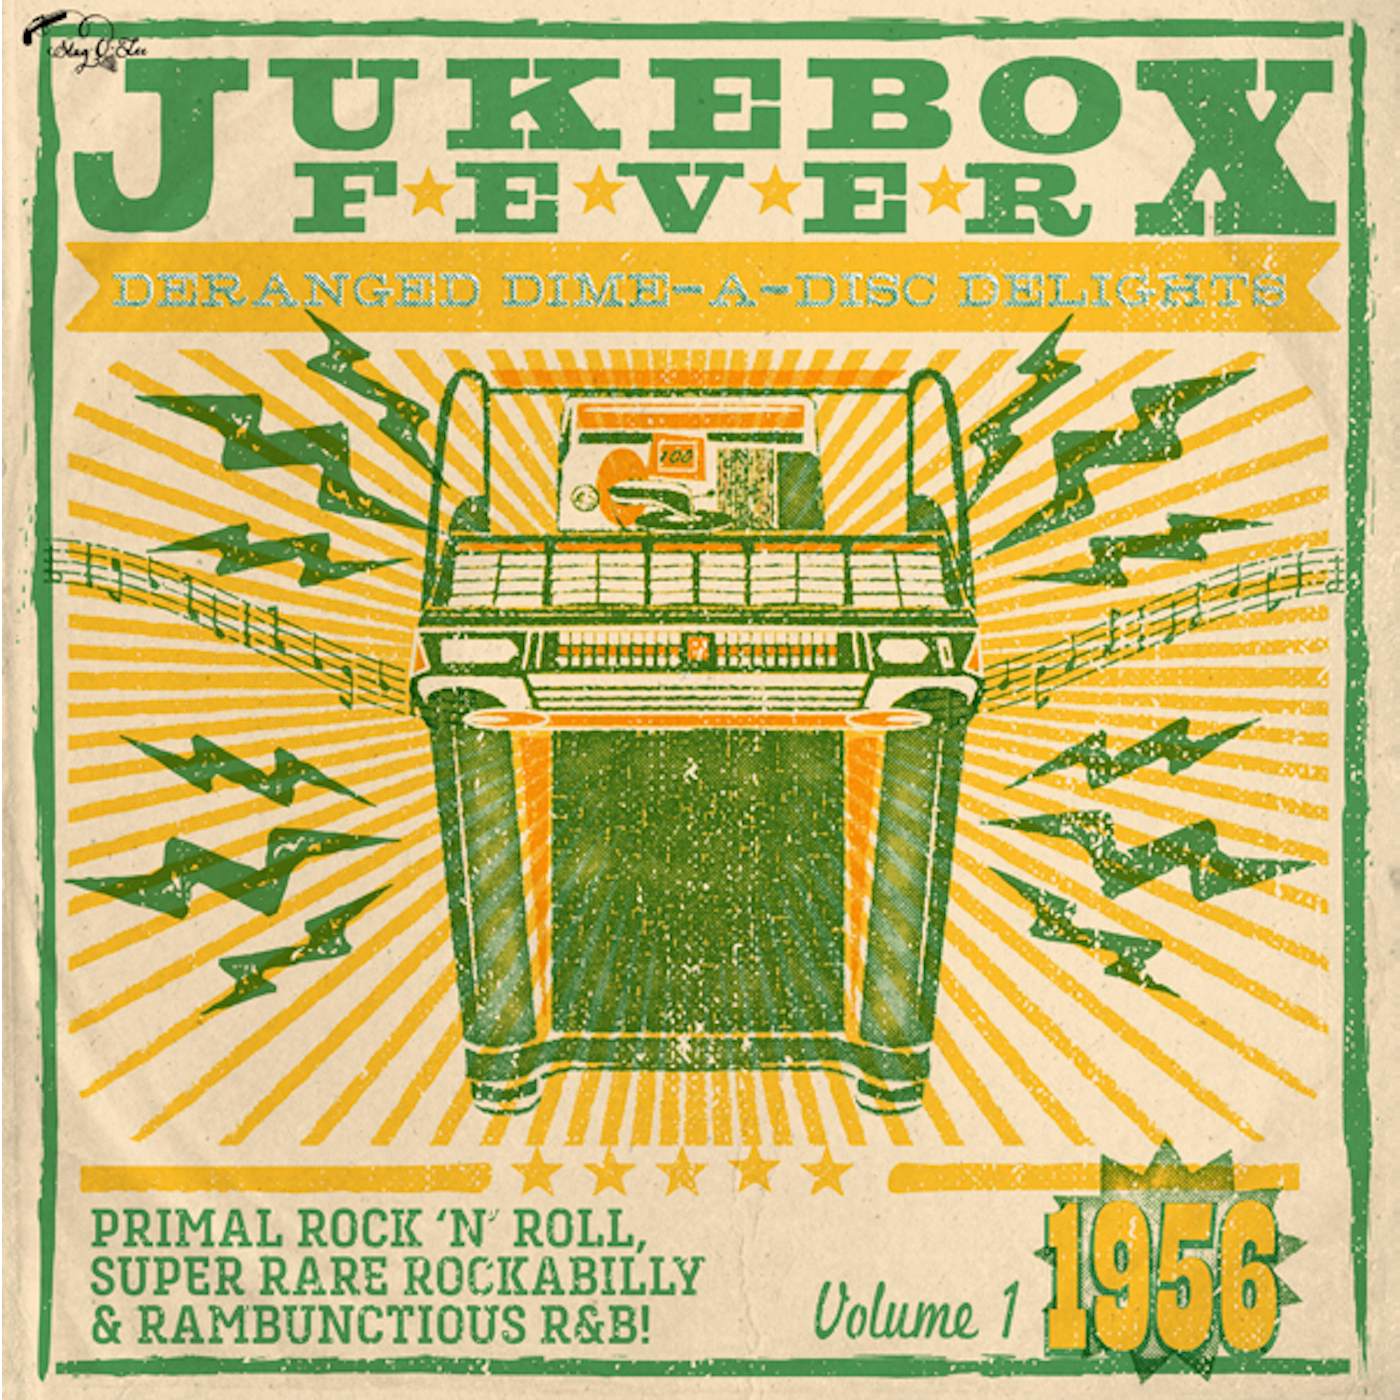 JUKEBOX FEVER 1 (1956) / VARIOUS   JUKEBOX FEVER 1 (1956) / VARIOUS Vinyl Record